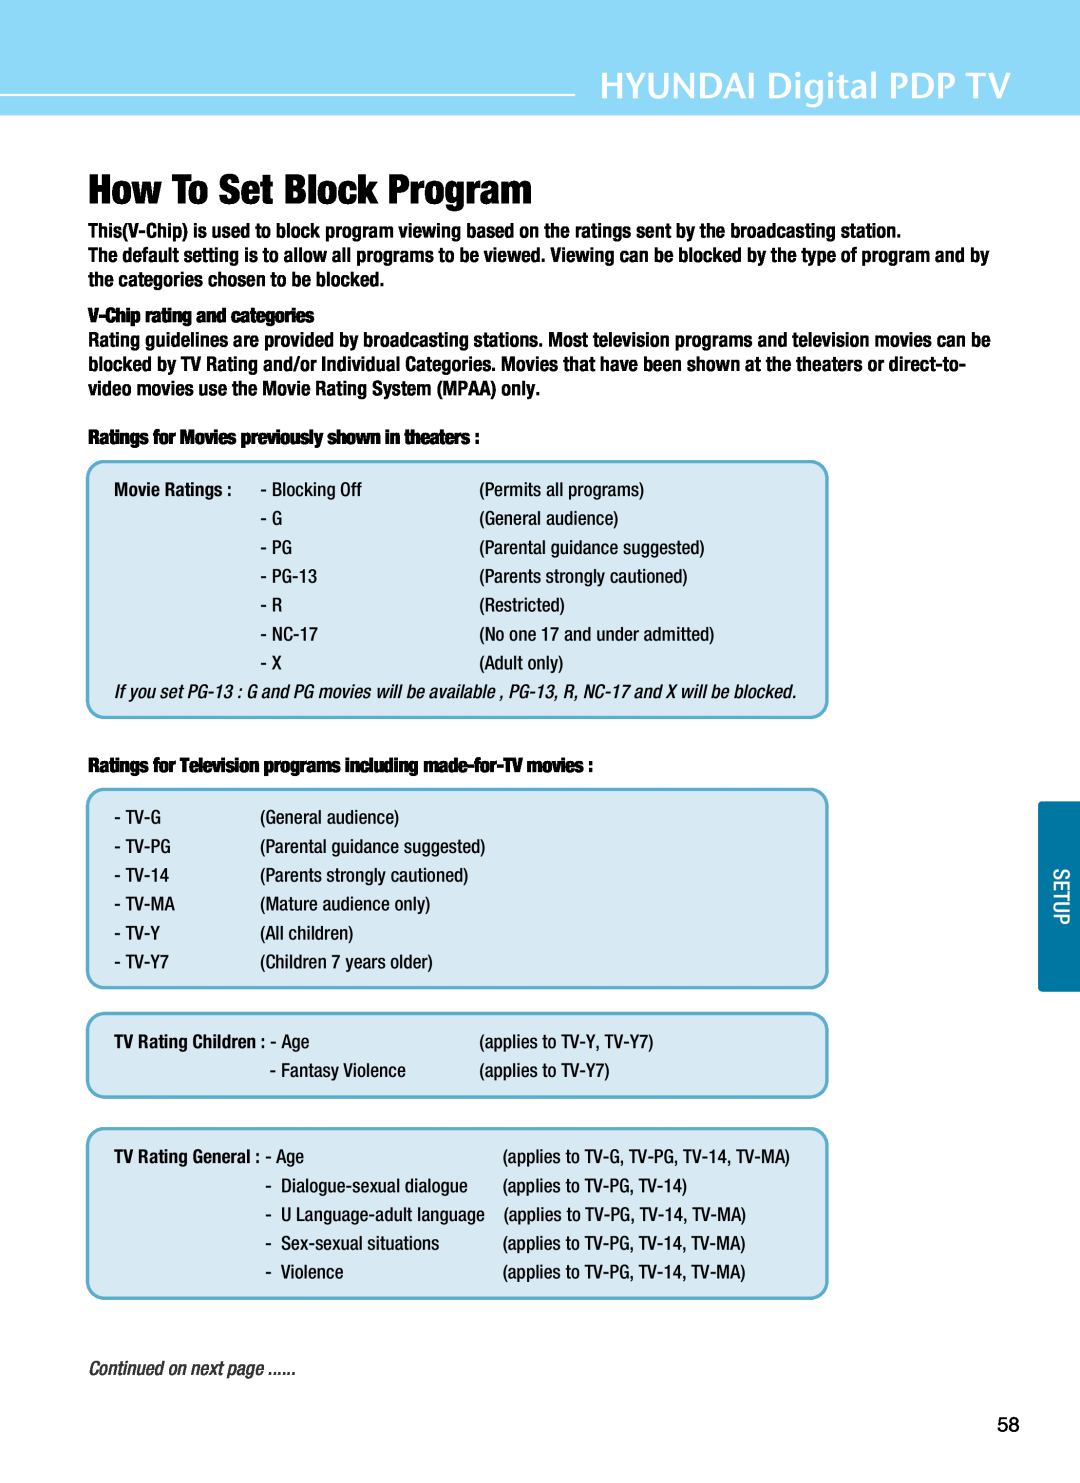 Hyundai Q421H, Q421S, Q501 manual How To Set Block Program, HYUNDAI Digital PDP TV, Setup, V-Chip rating and categories 